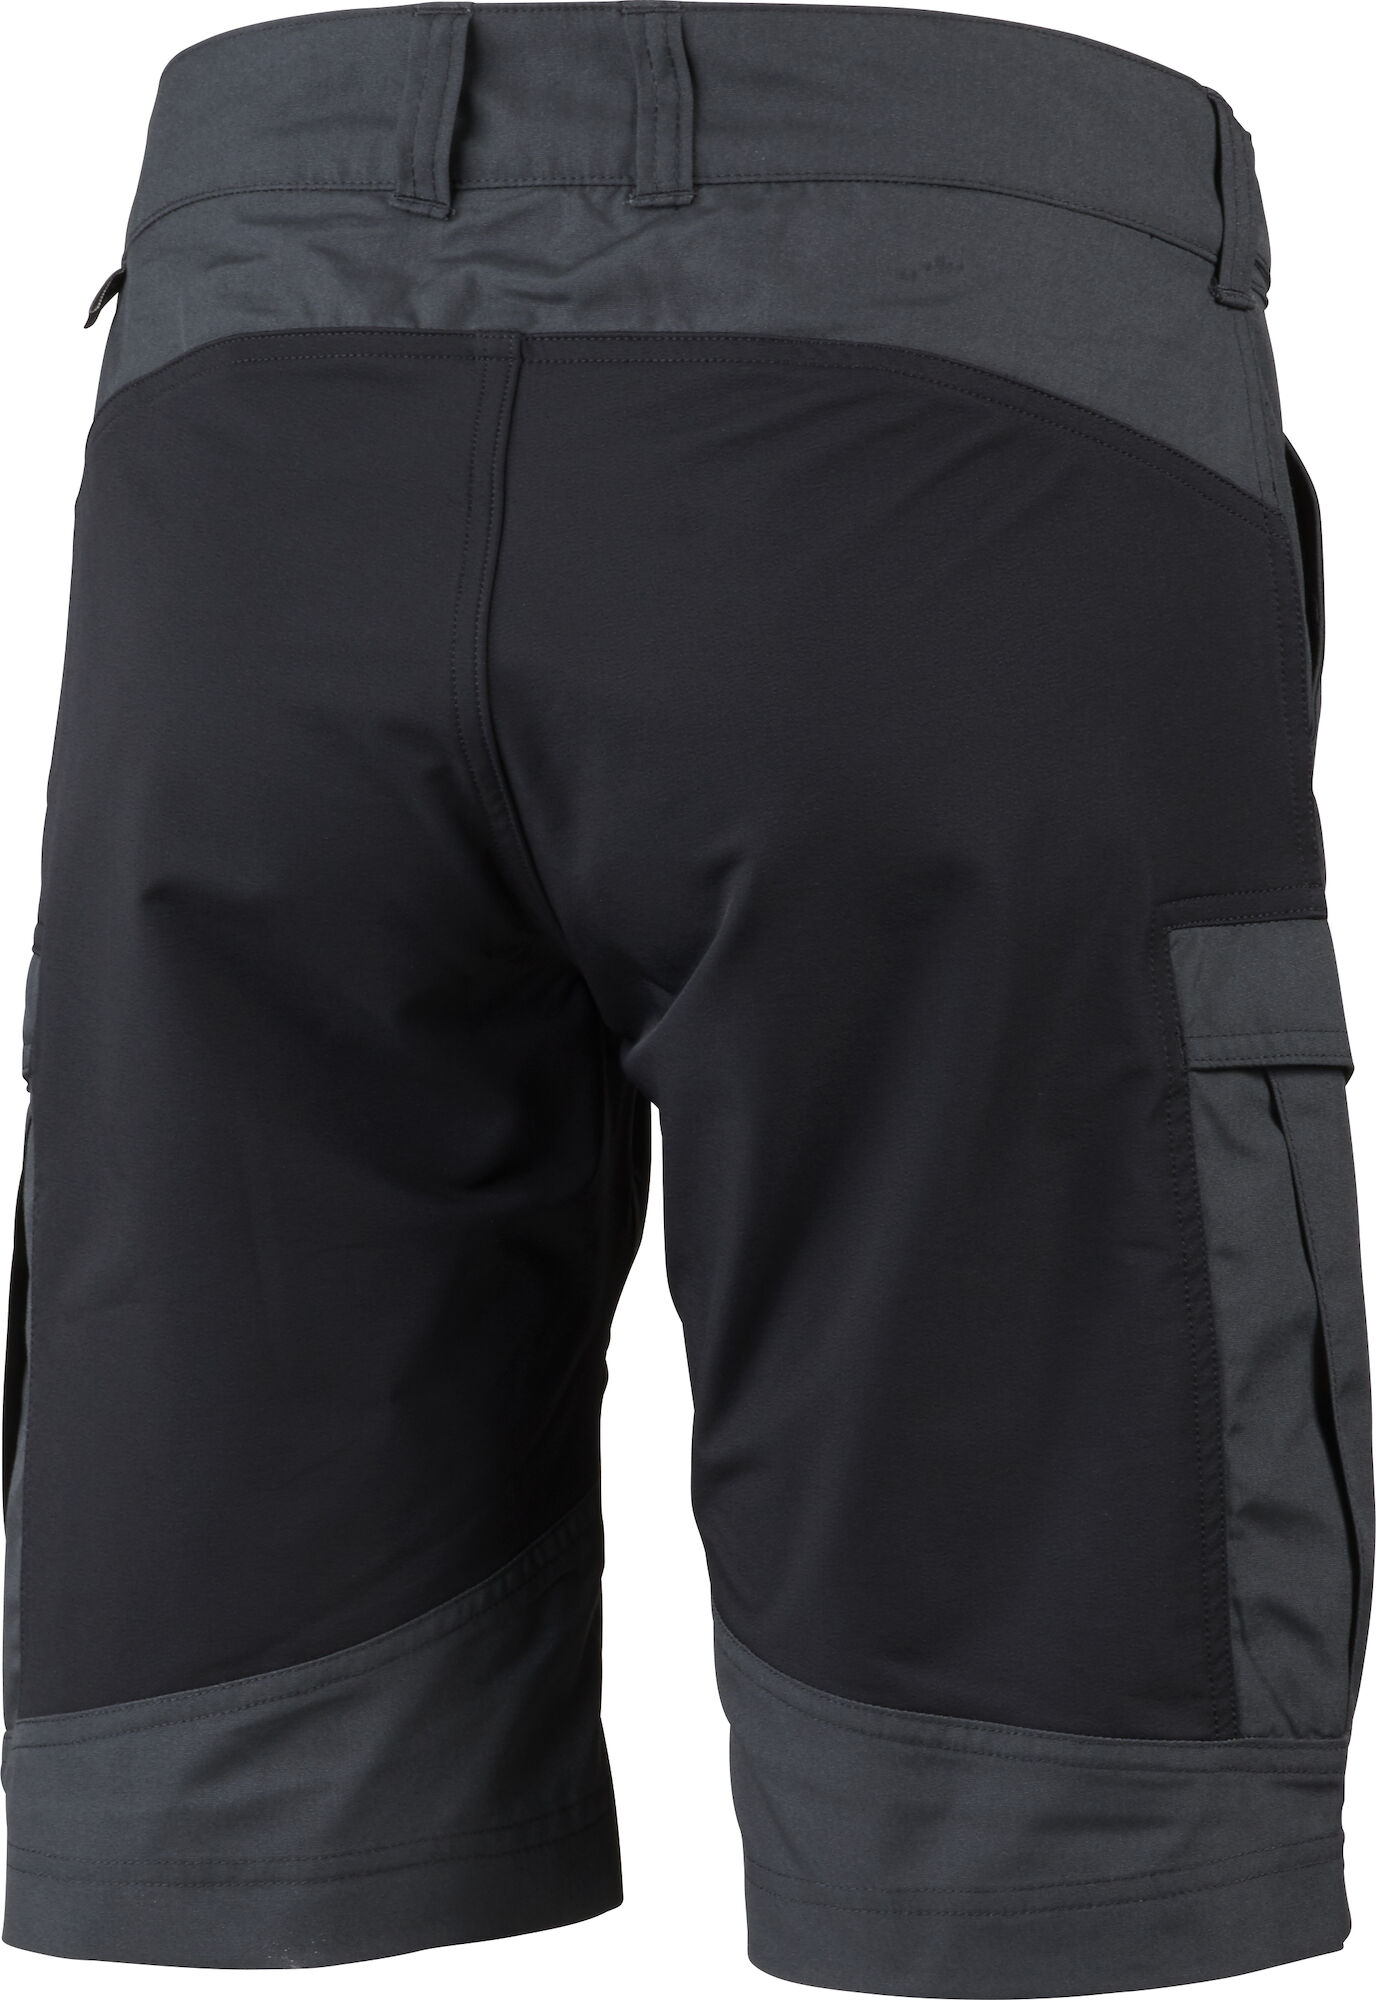 Vanner Ws Shorts Charcoal/Black